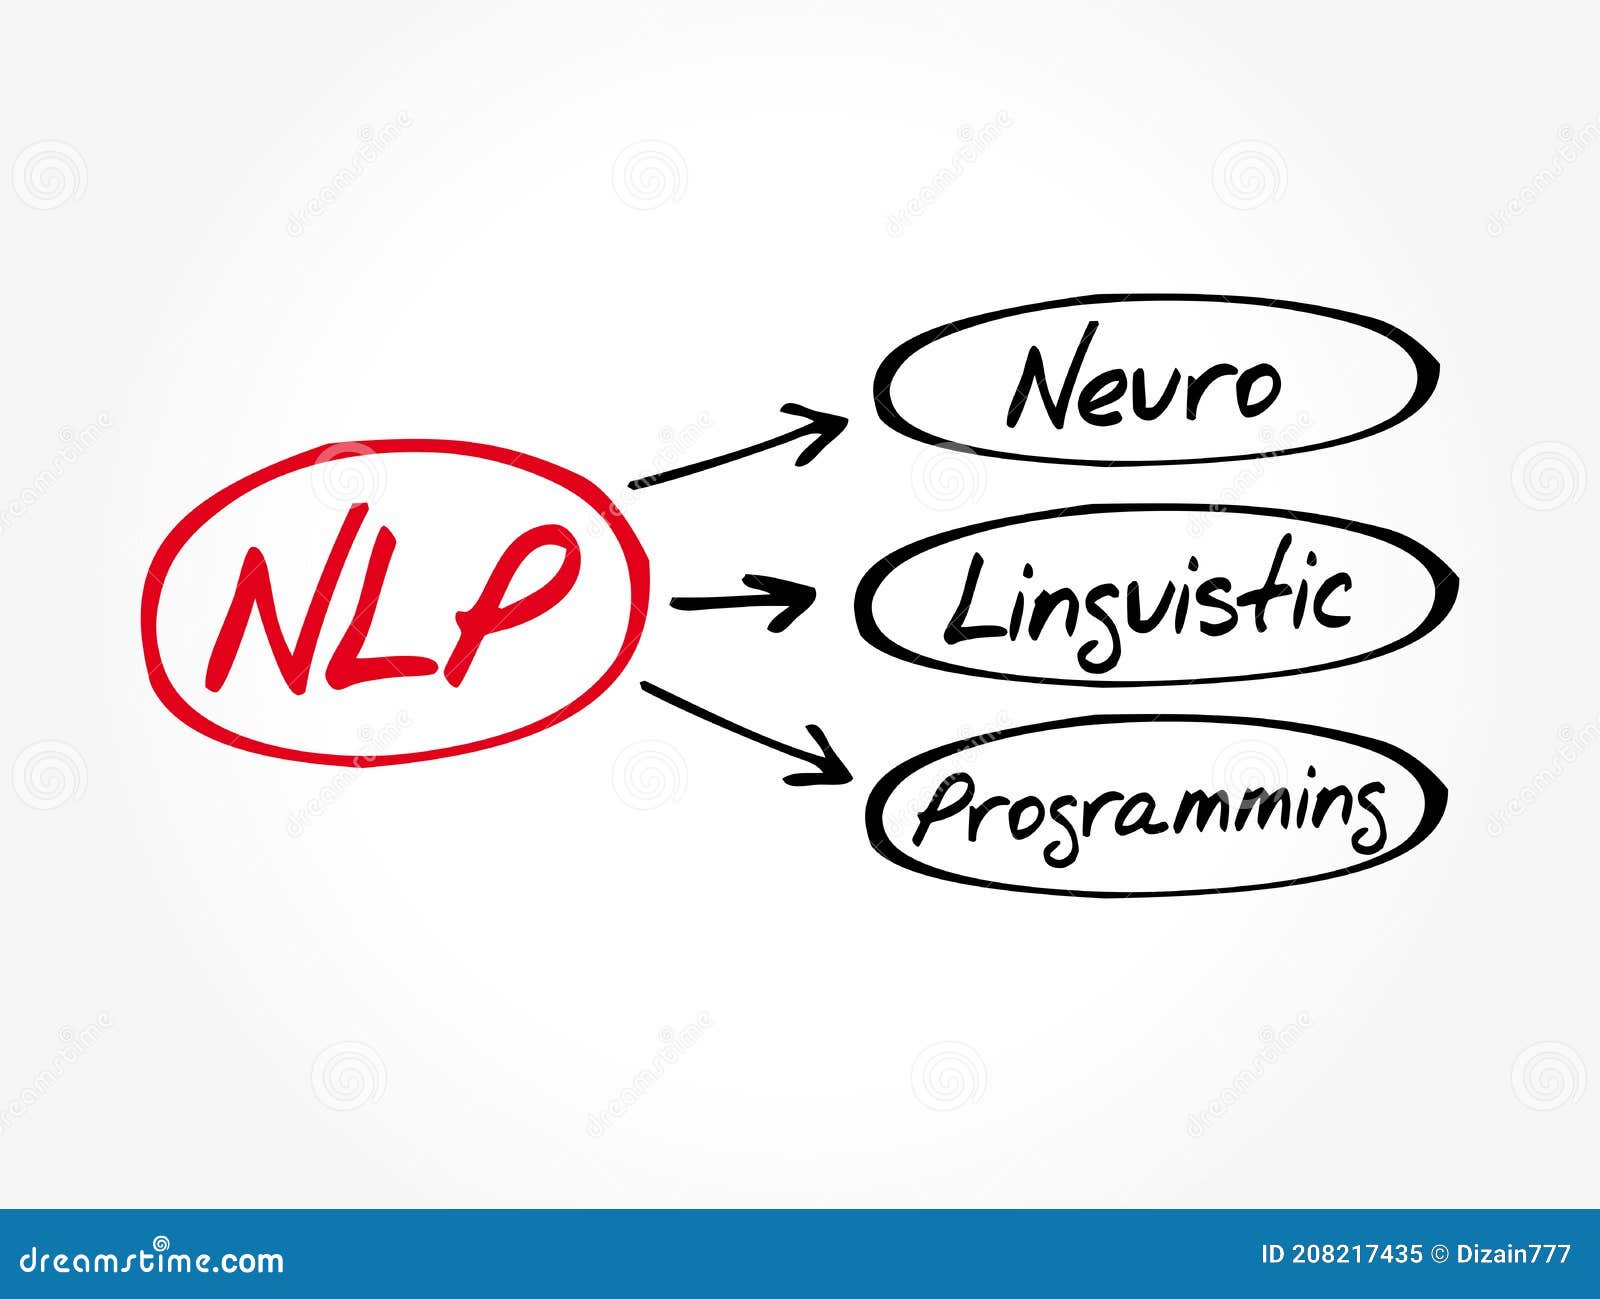 nlp - neuro linguistic programming acronym